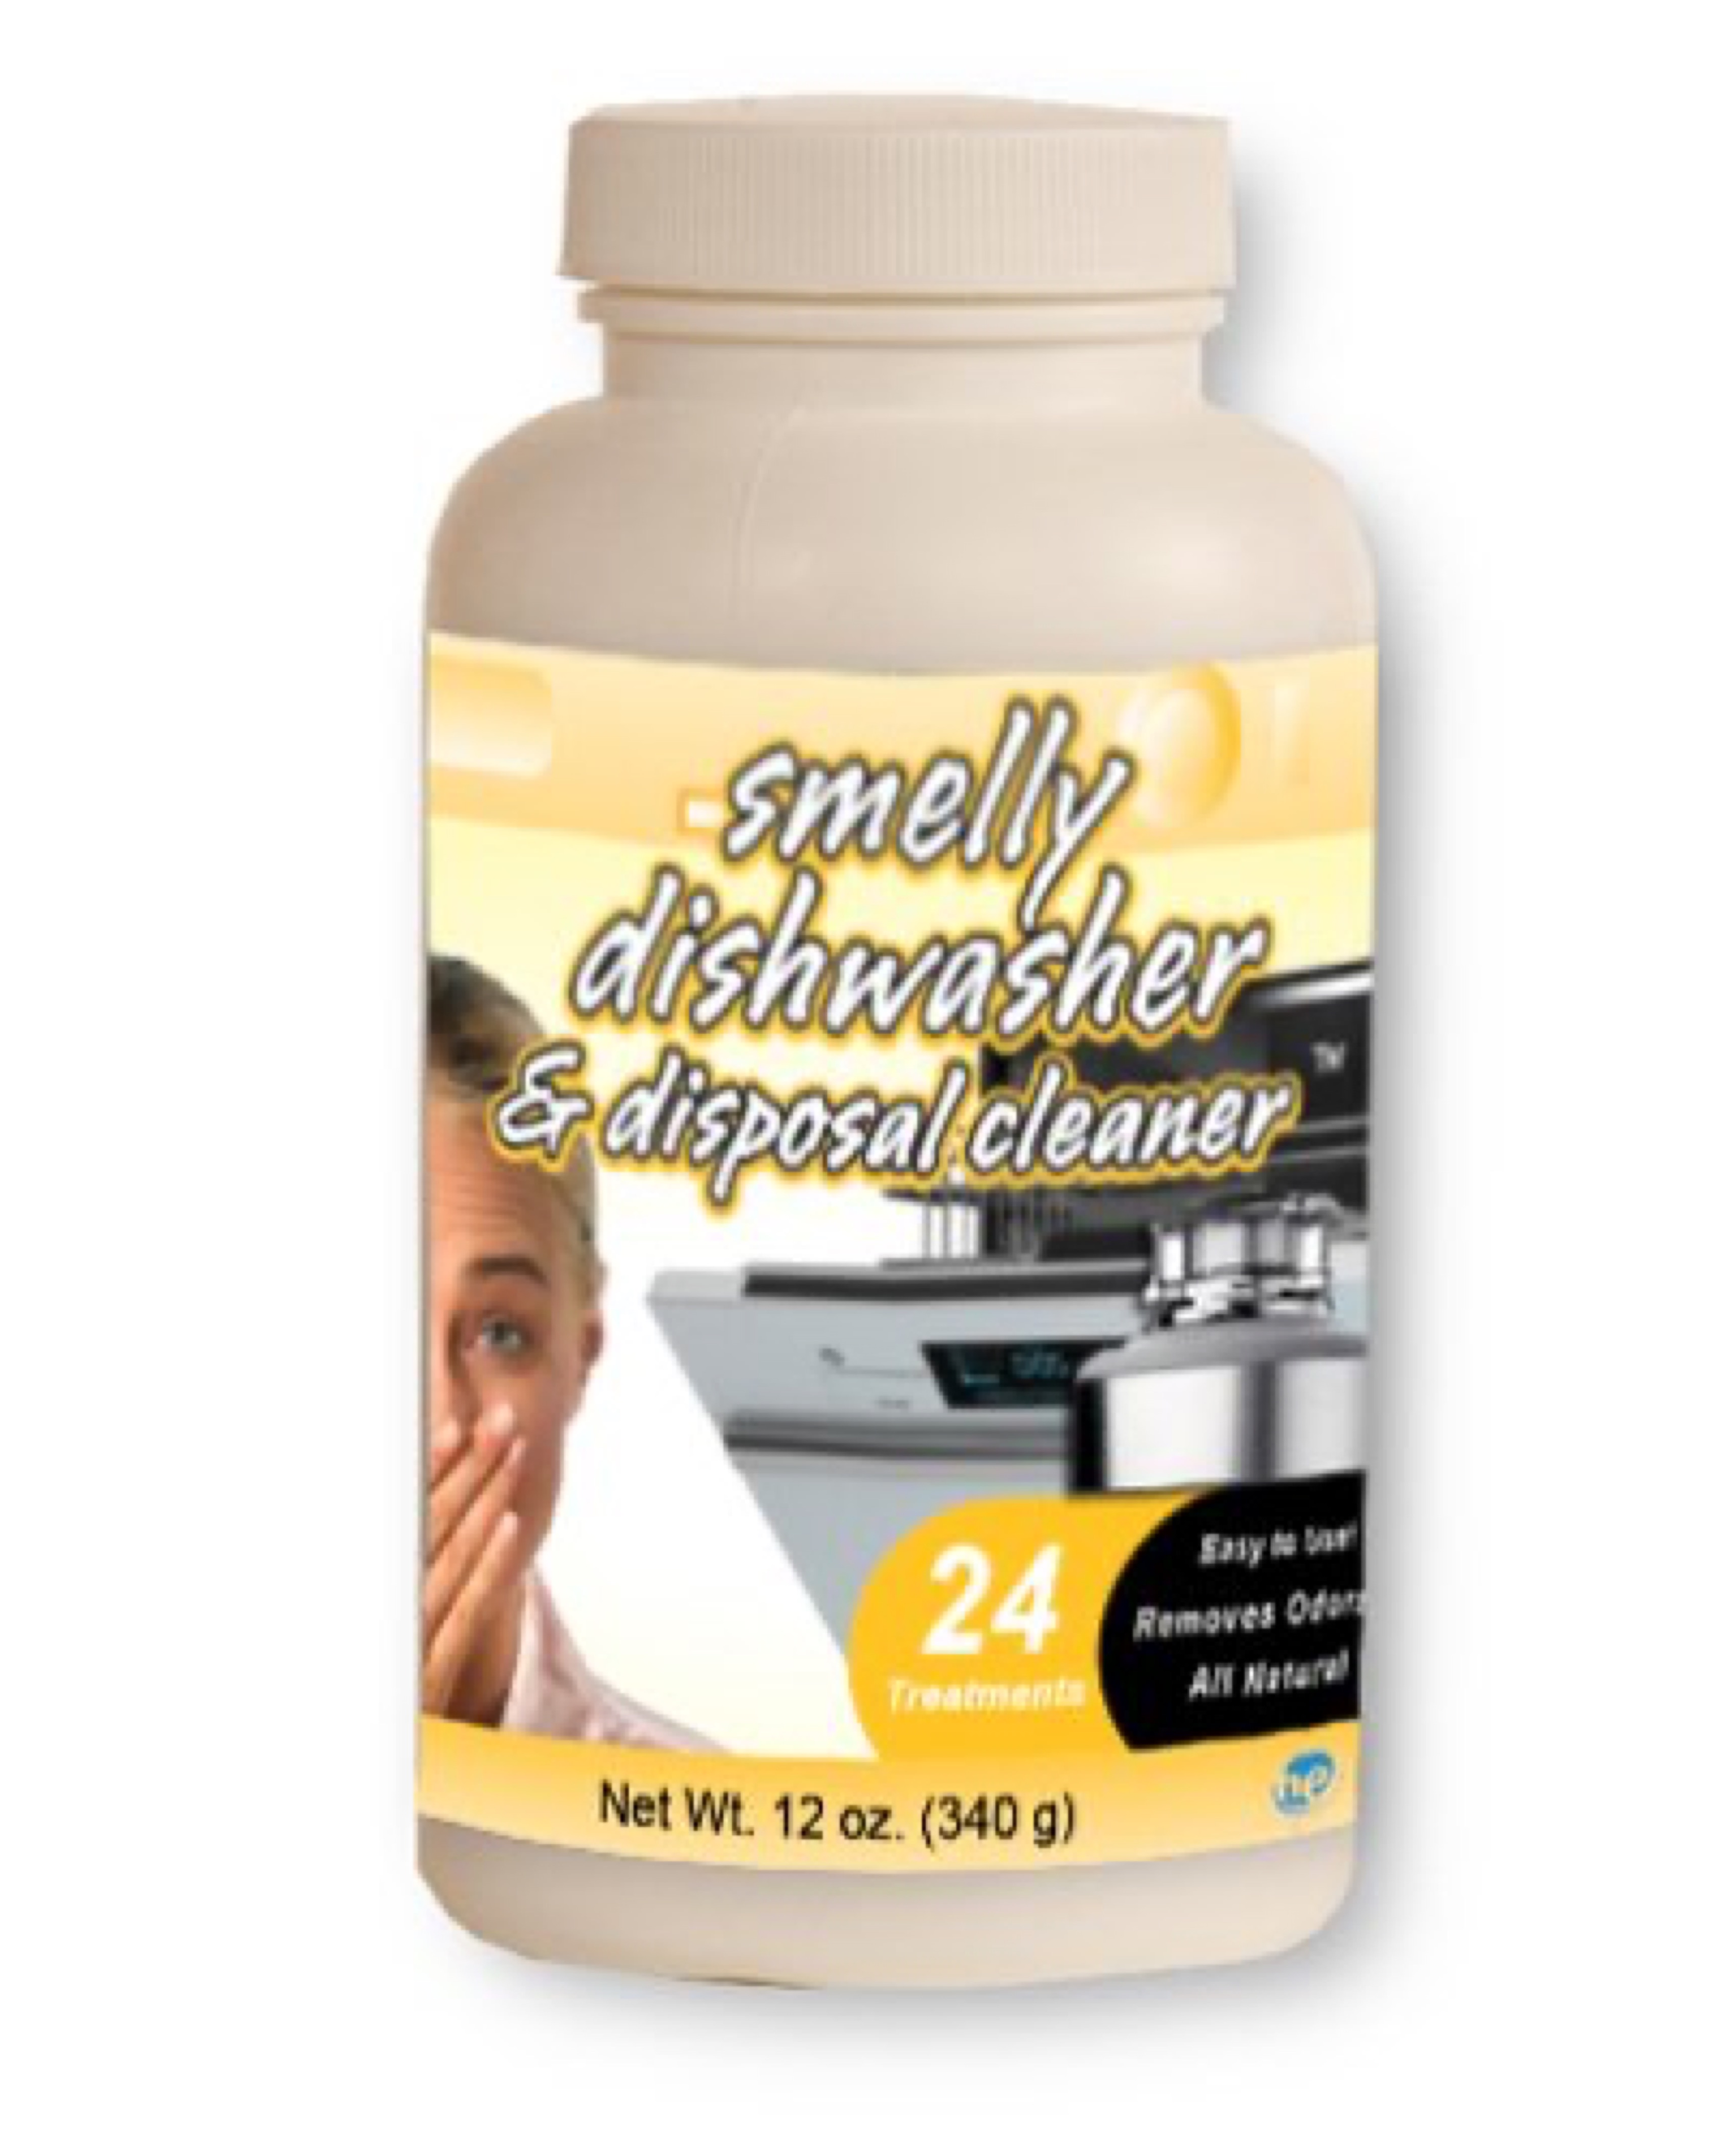 blog image - smelly dishwasher